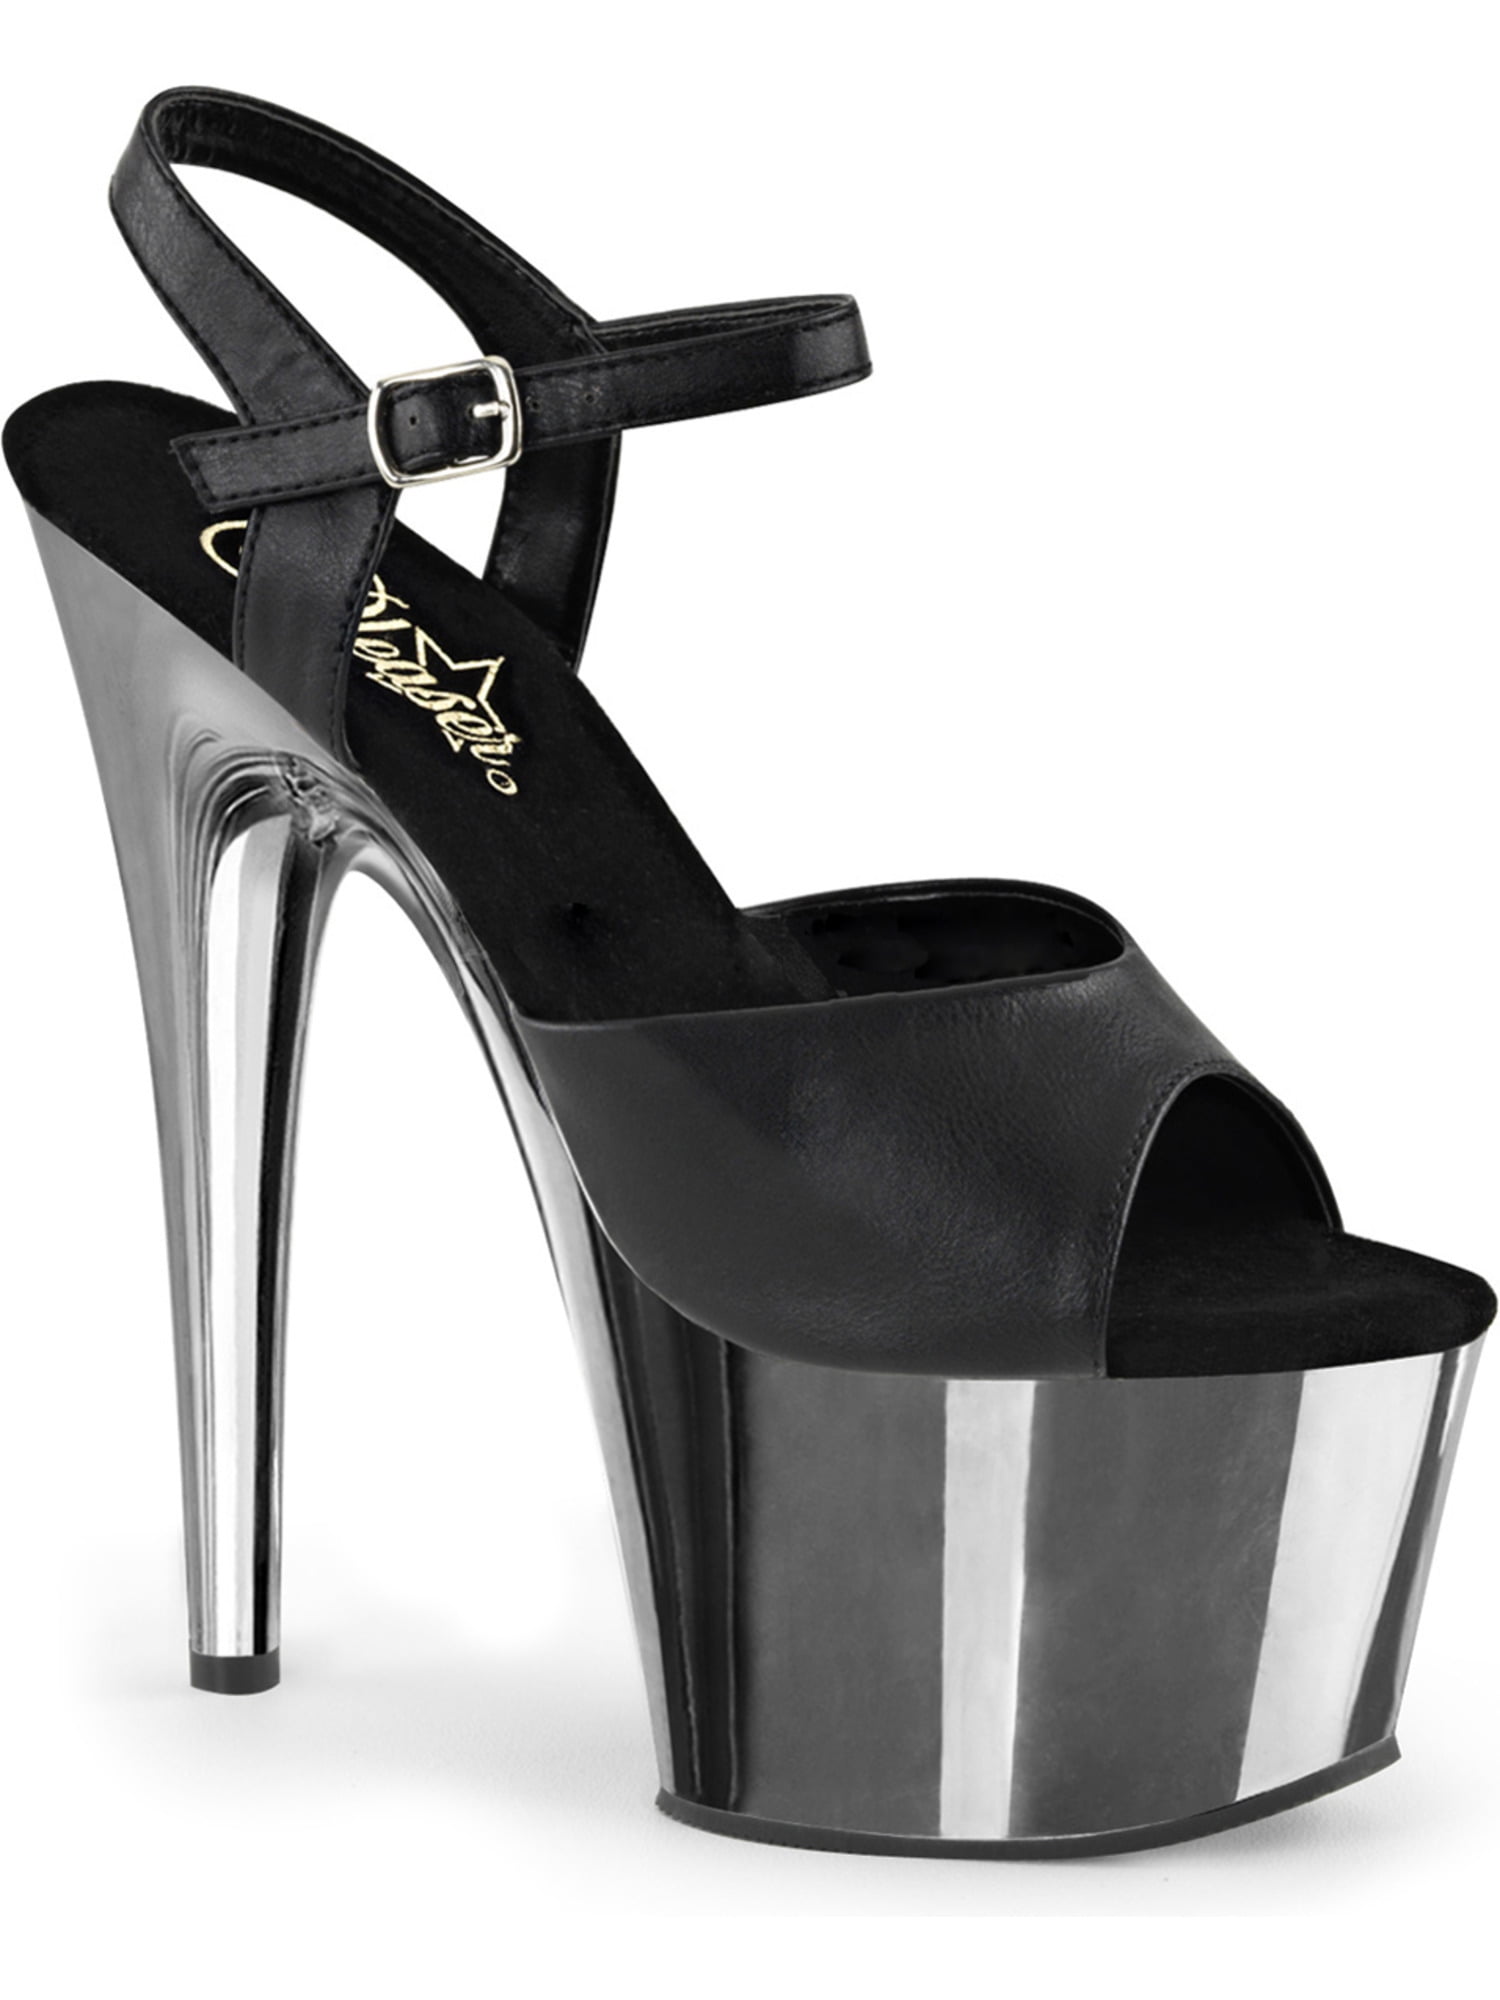 7 stiletto heels